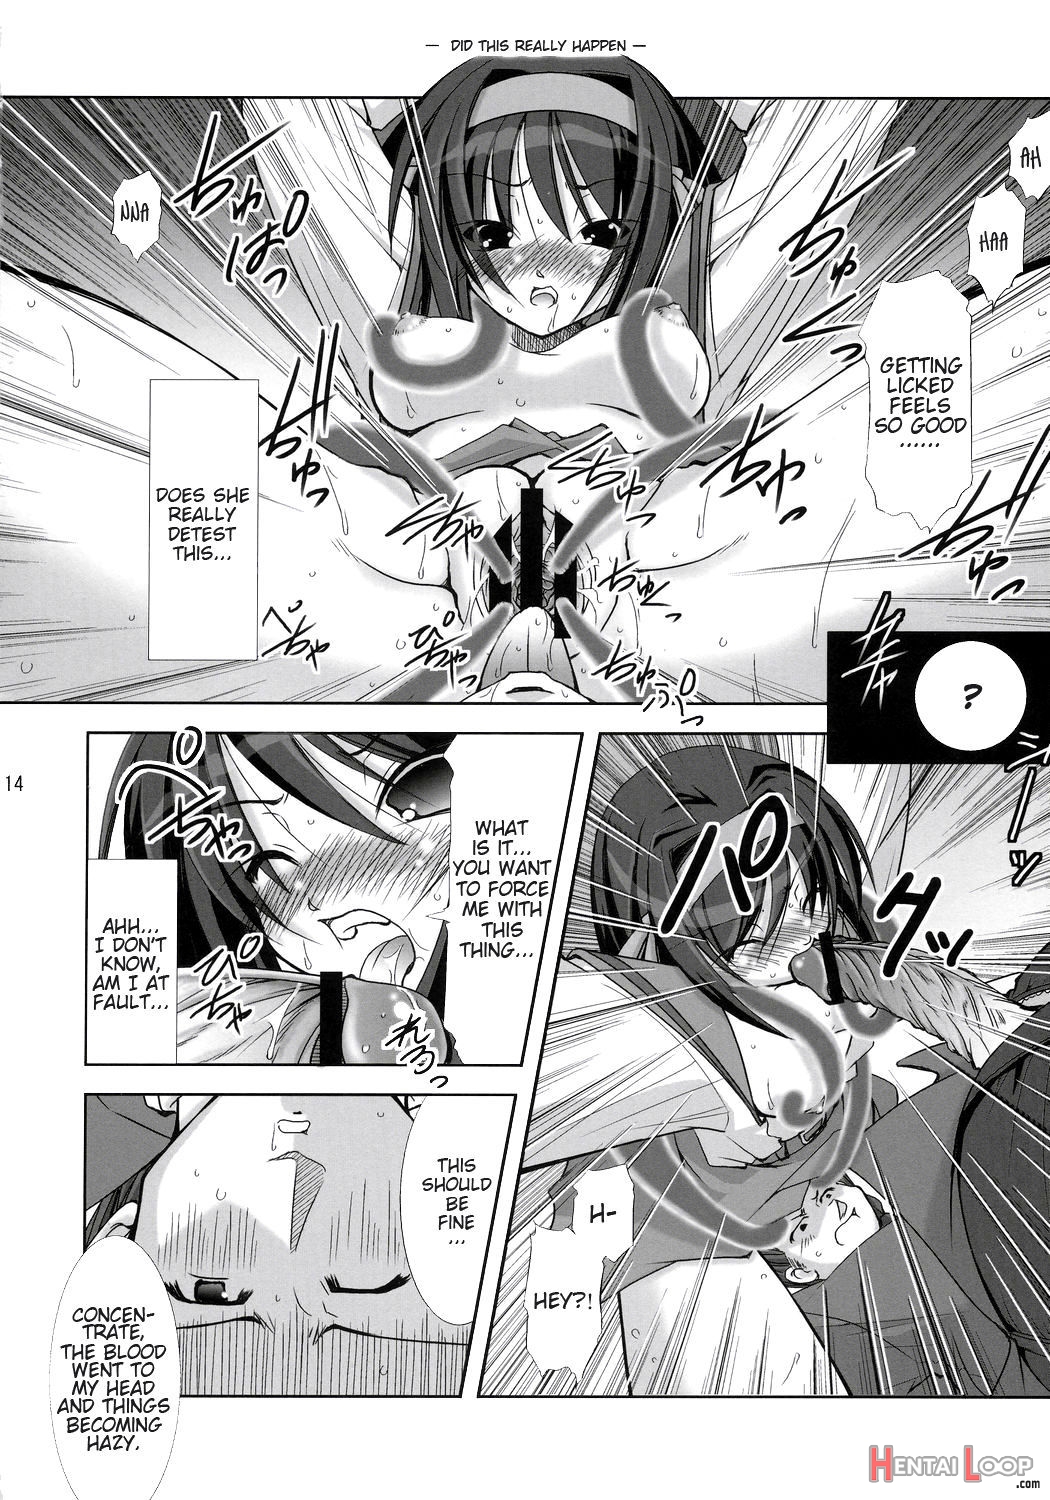 Haruhi Suzumiya's Fetish page 13